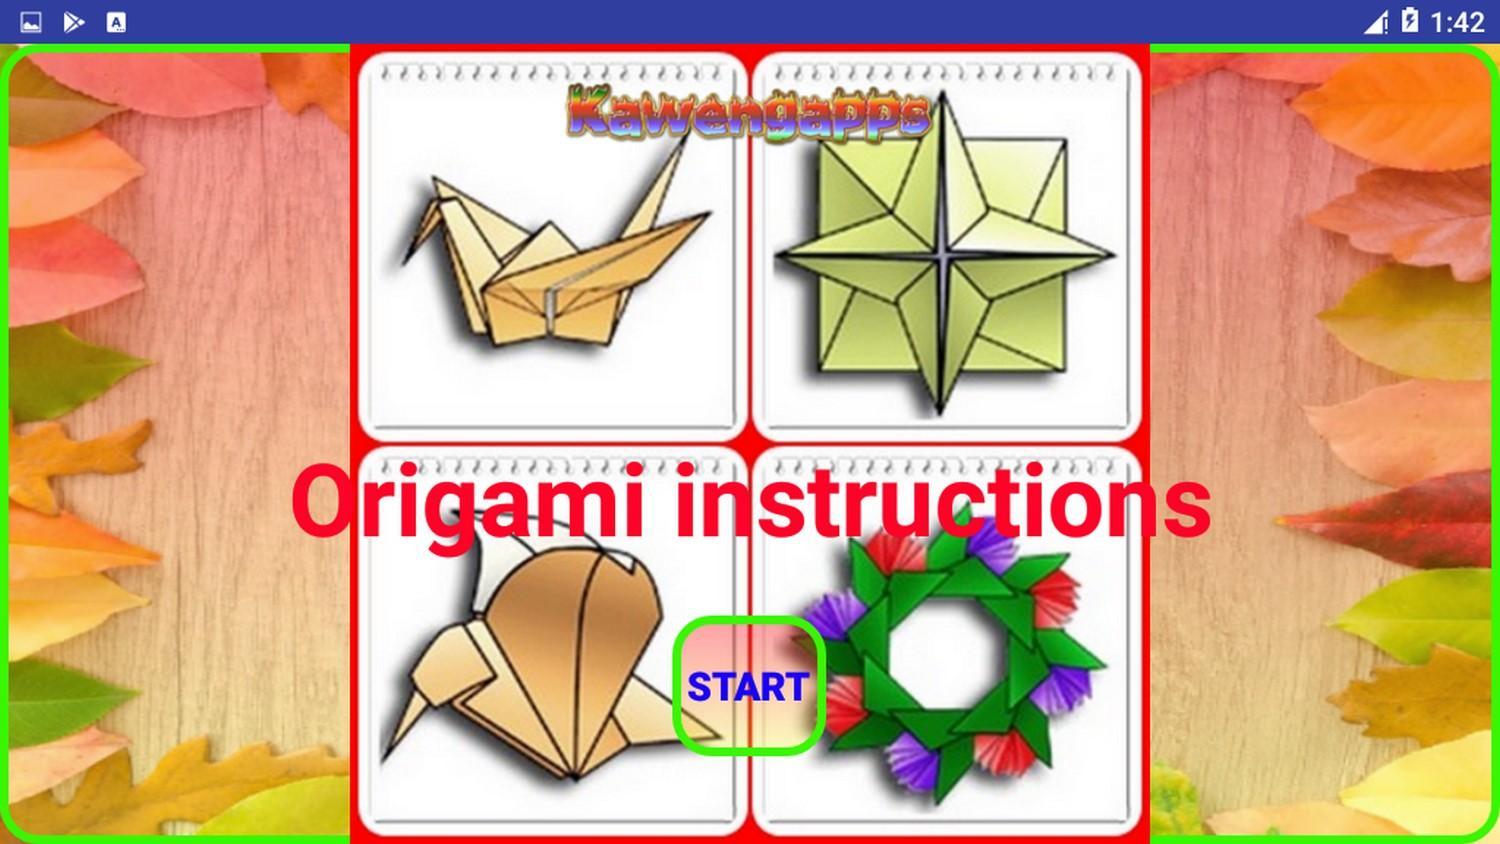 Origami Instructions 2.0 Screenshot 6